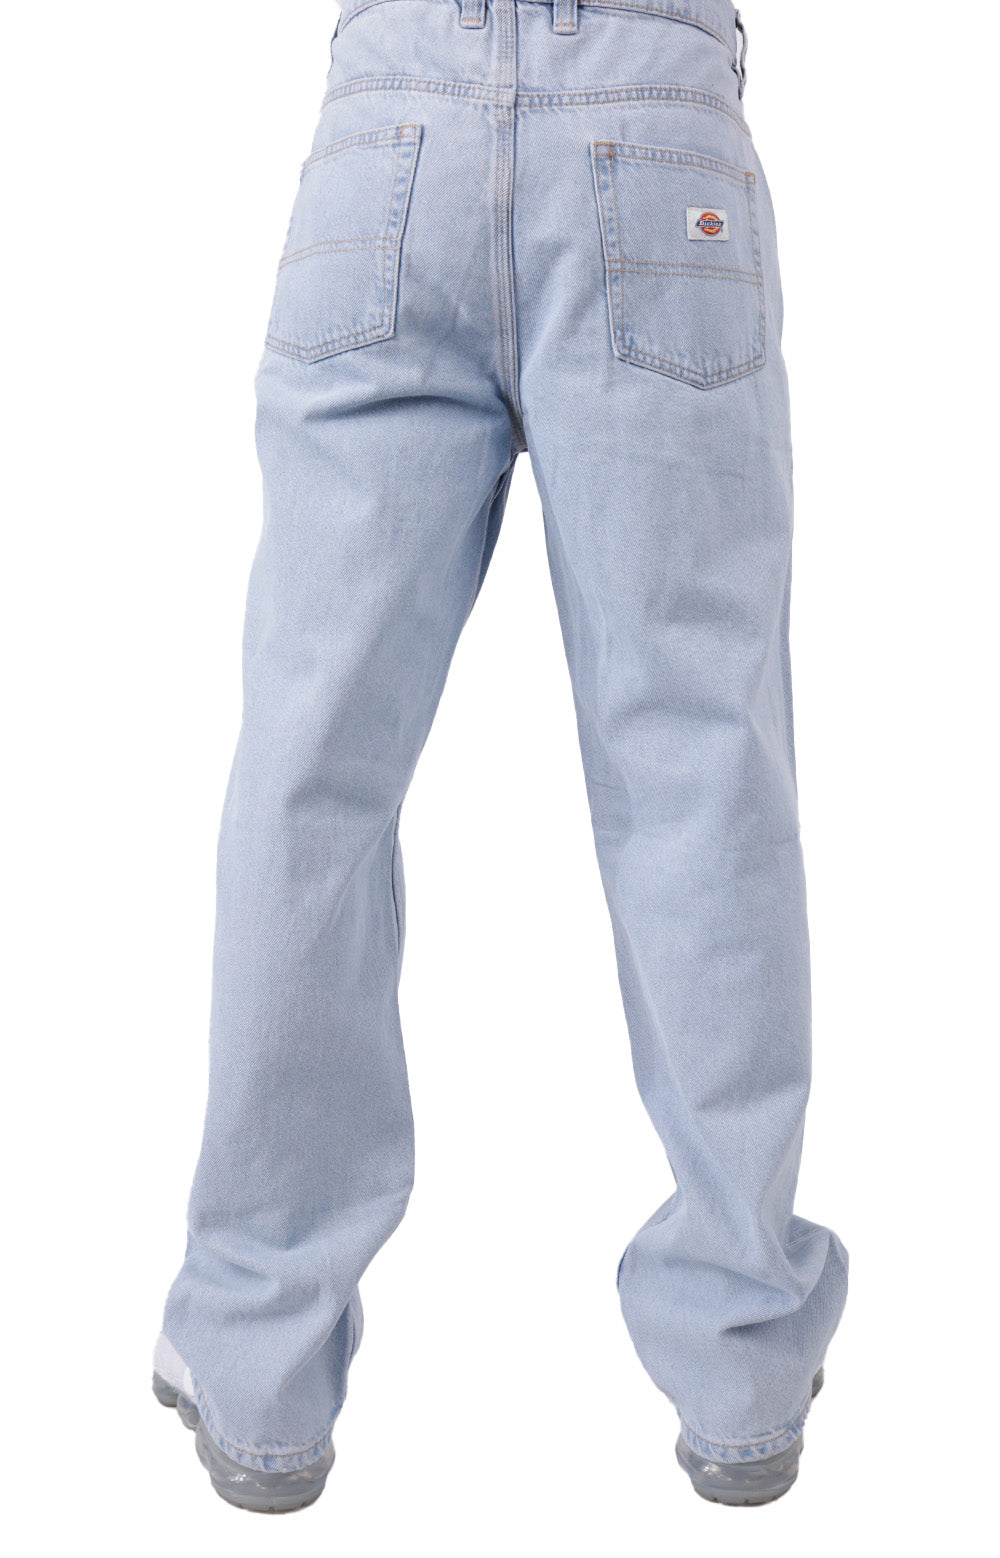 (DUR07LTD) Thomasville Denim Jeans - Light Denim